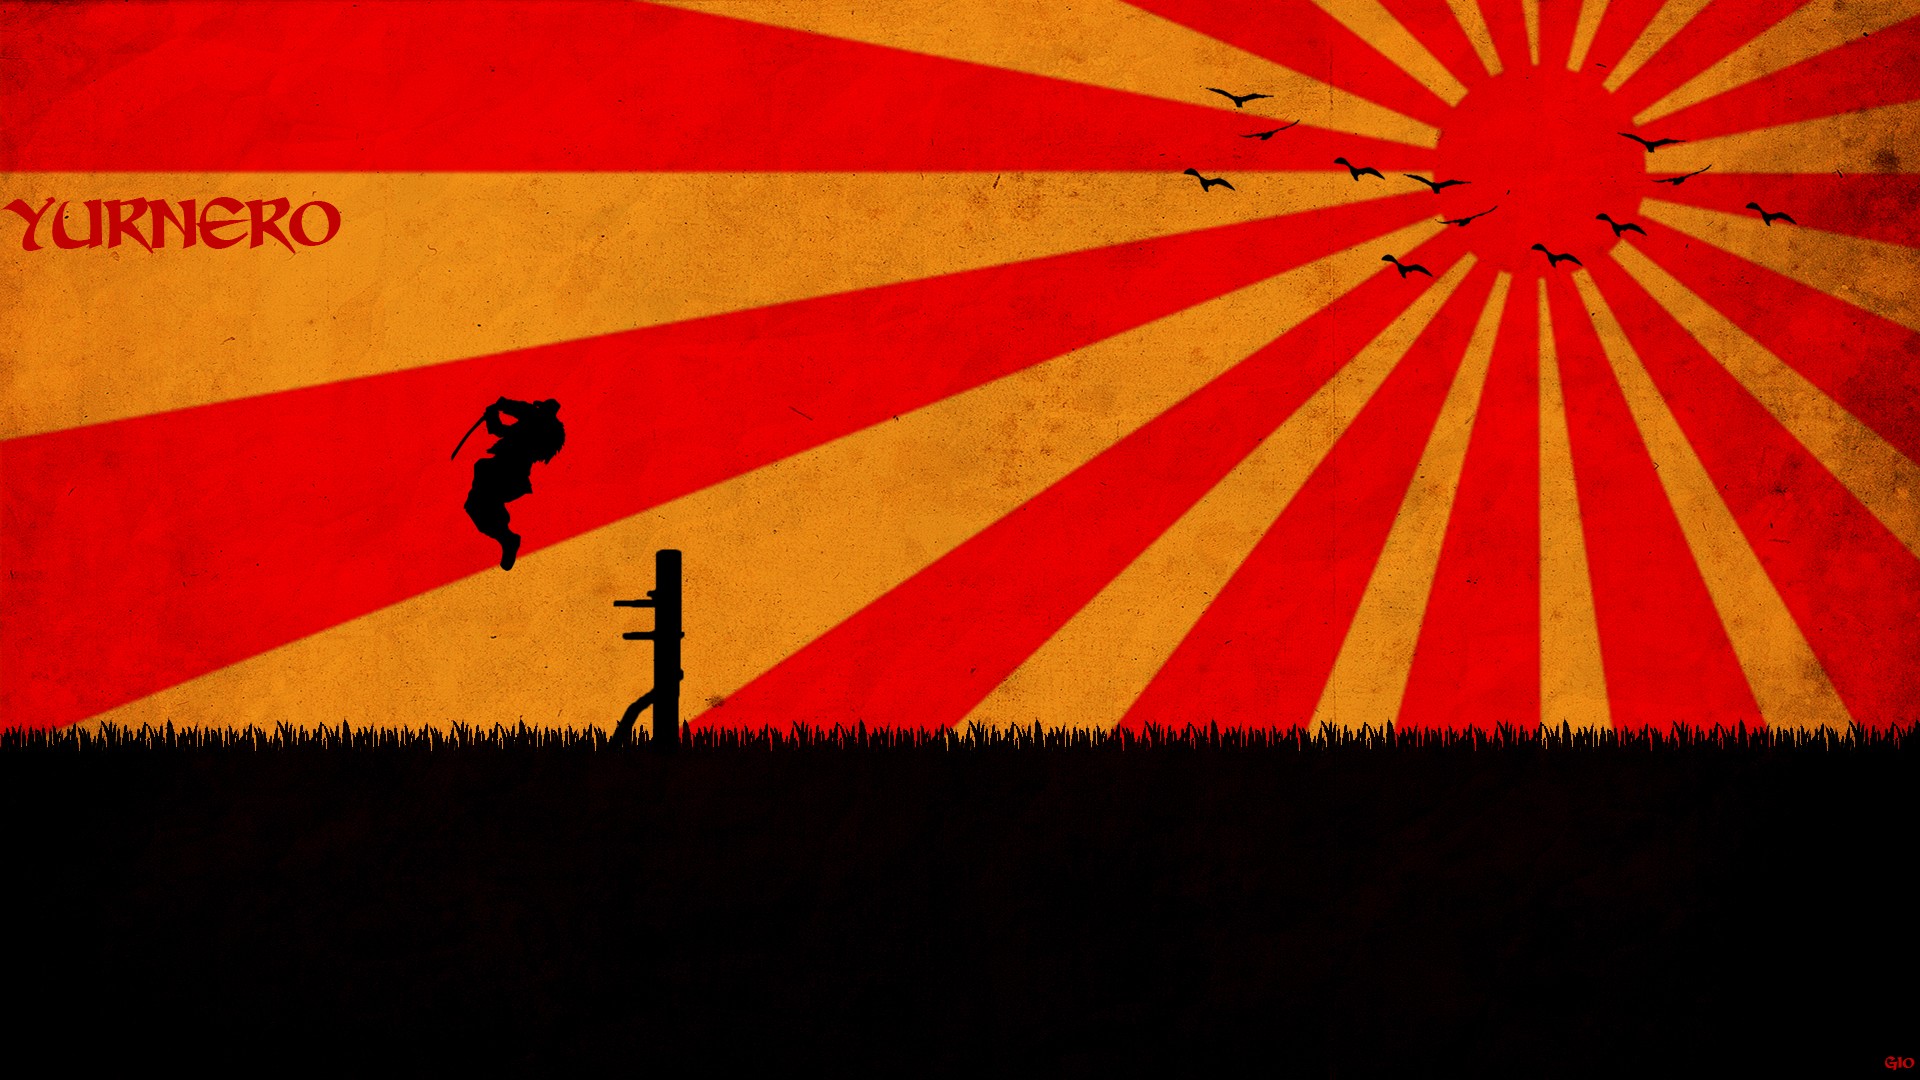 General 1920x1080 yurnero Dota Dota 2 Juggernaut Japan sword katana jumping PC gaming video game art birds Sun